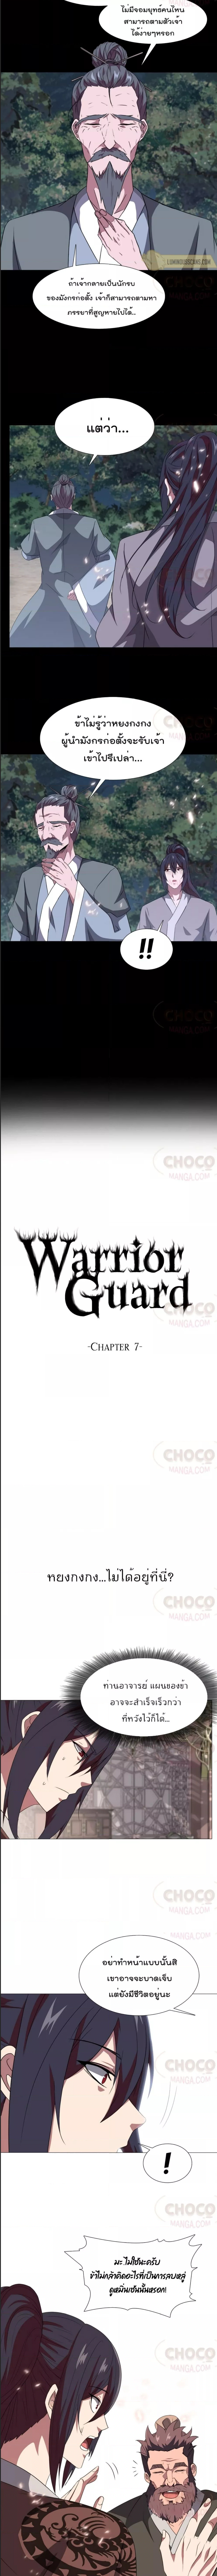 Warrior Guard 7 1 (2)